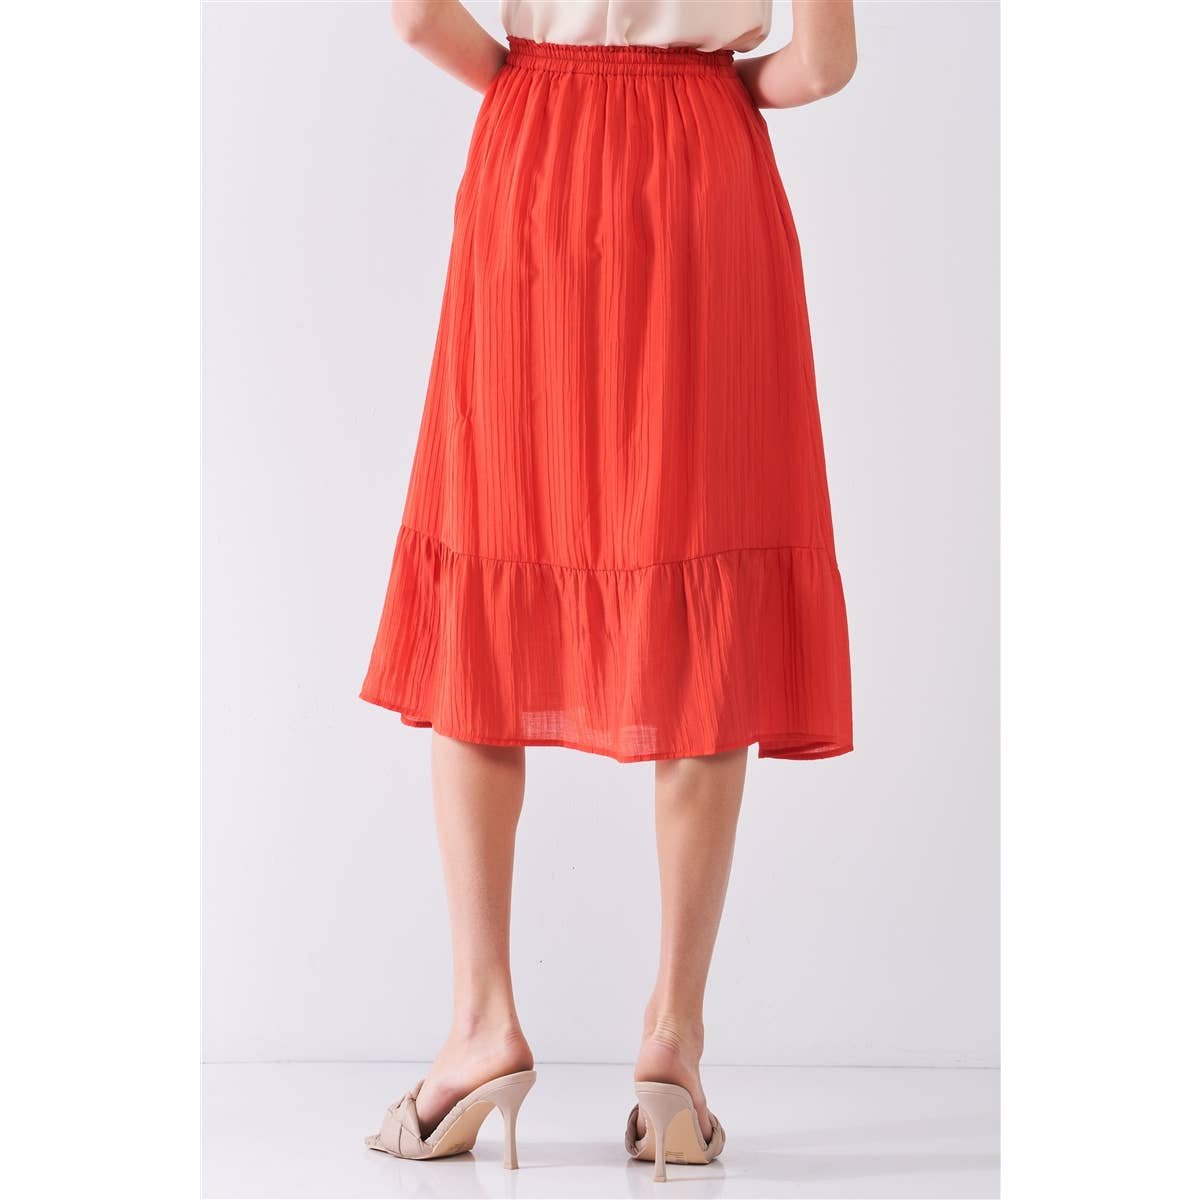 reasonable price Red High Waist Pleated Midi Skirt M ltp6XjedM just buy it